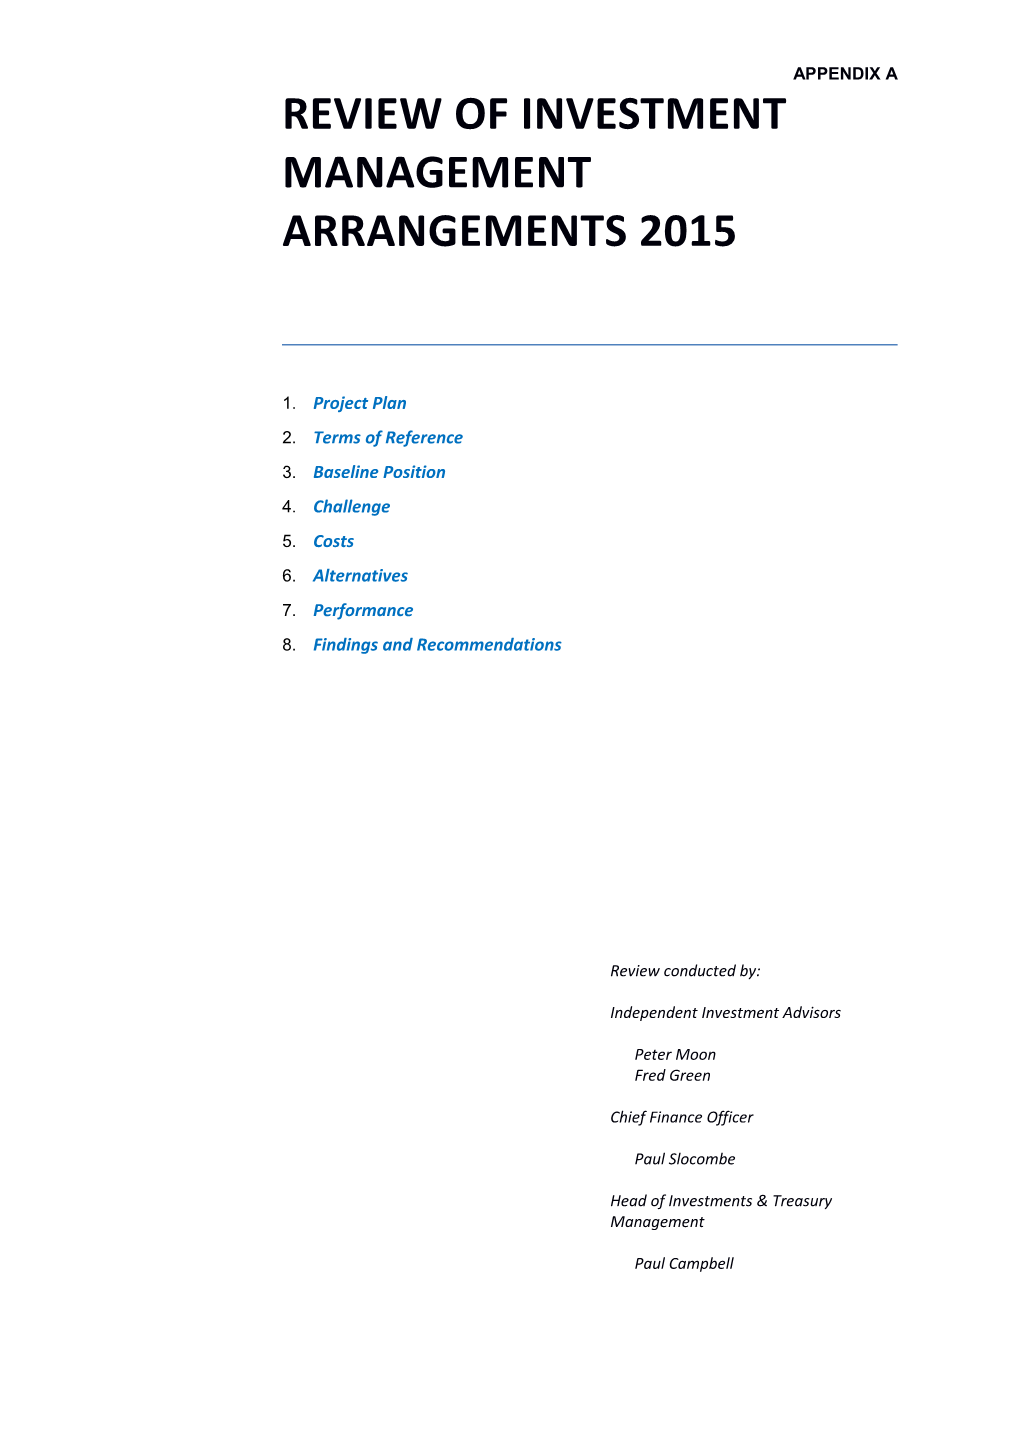 Review of Investment Management Arrangements 2015